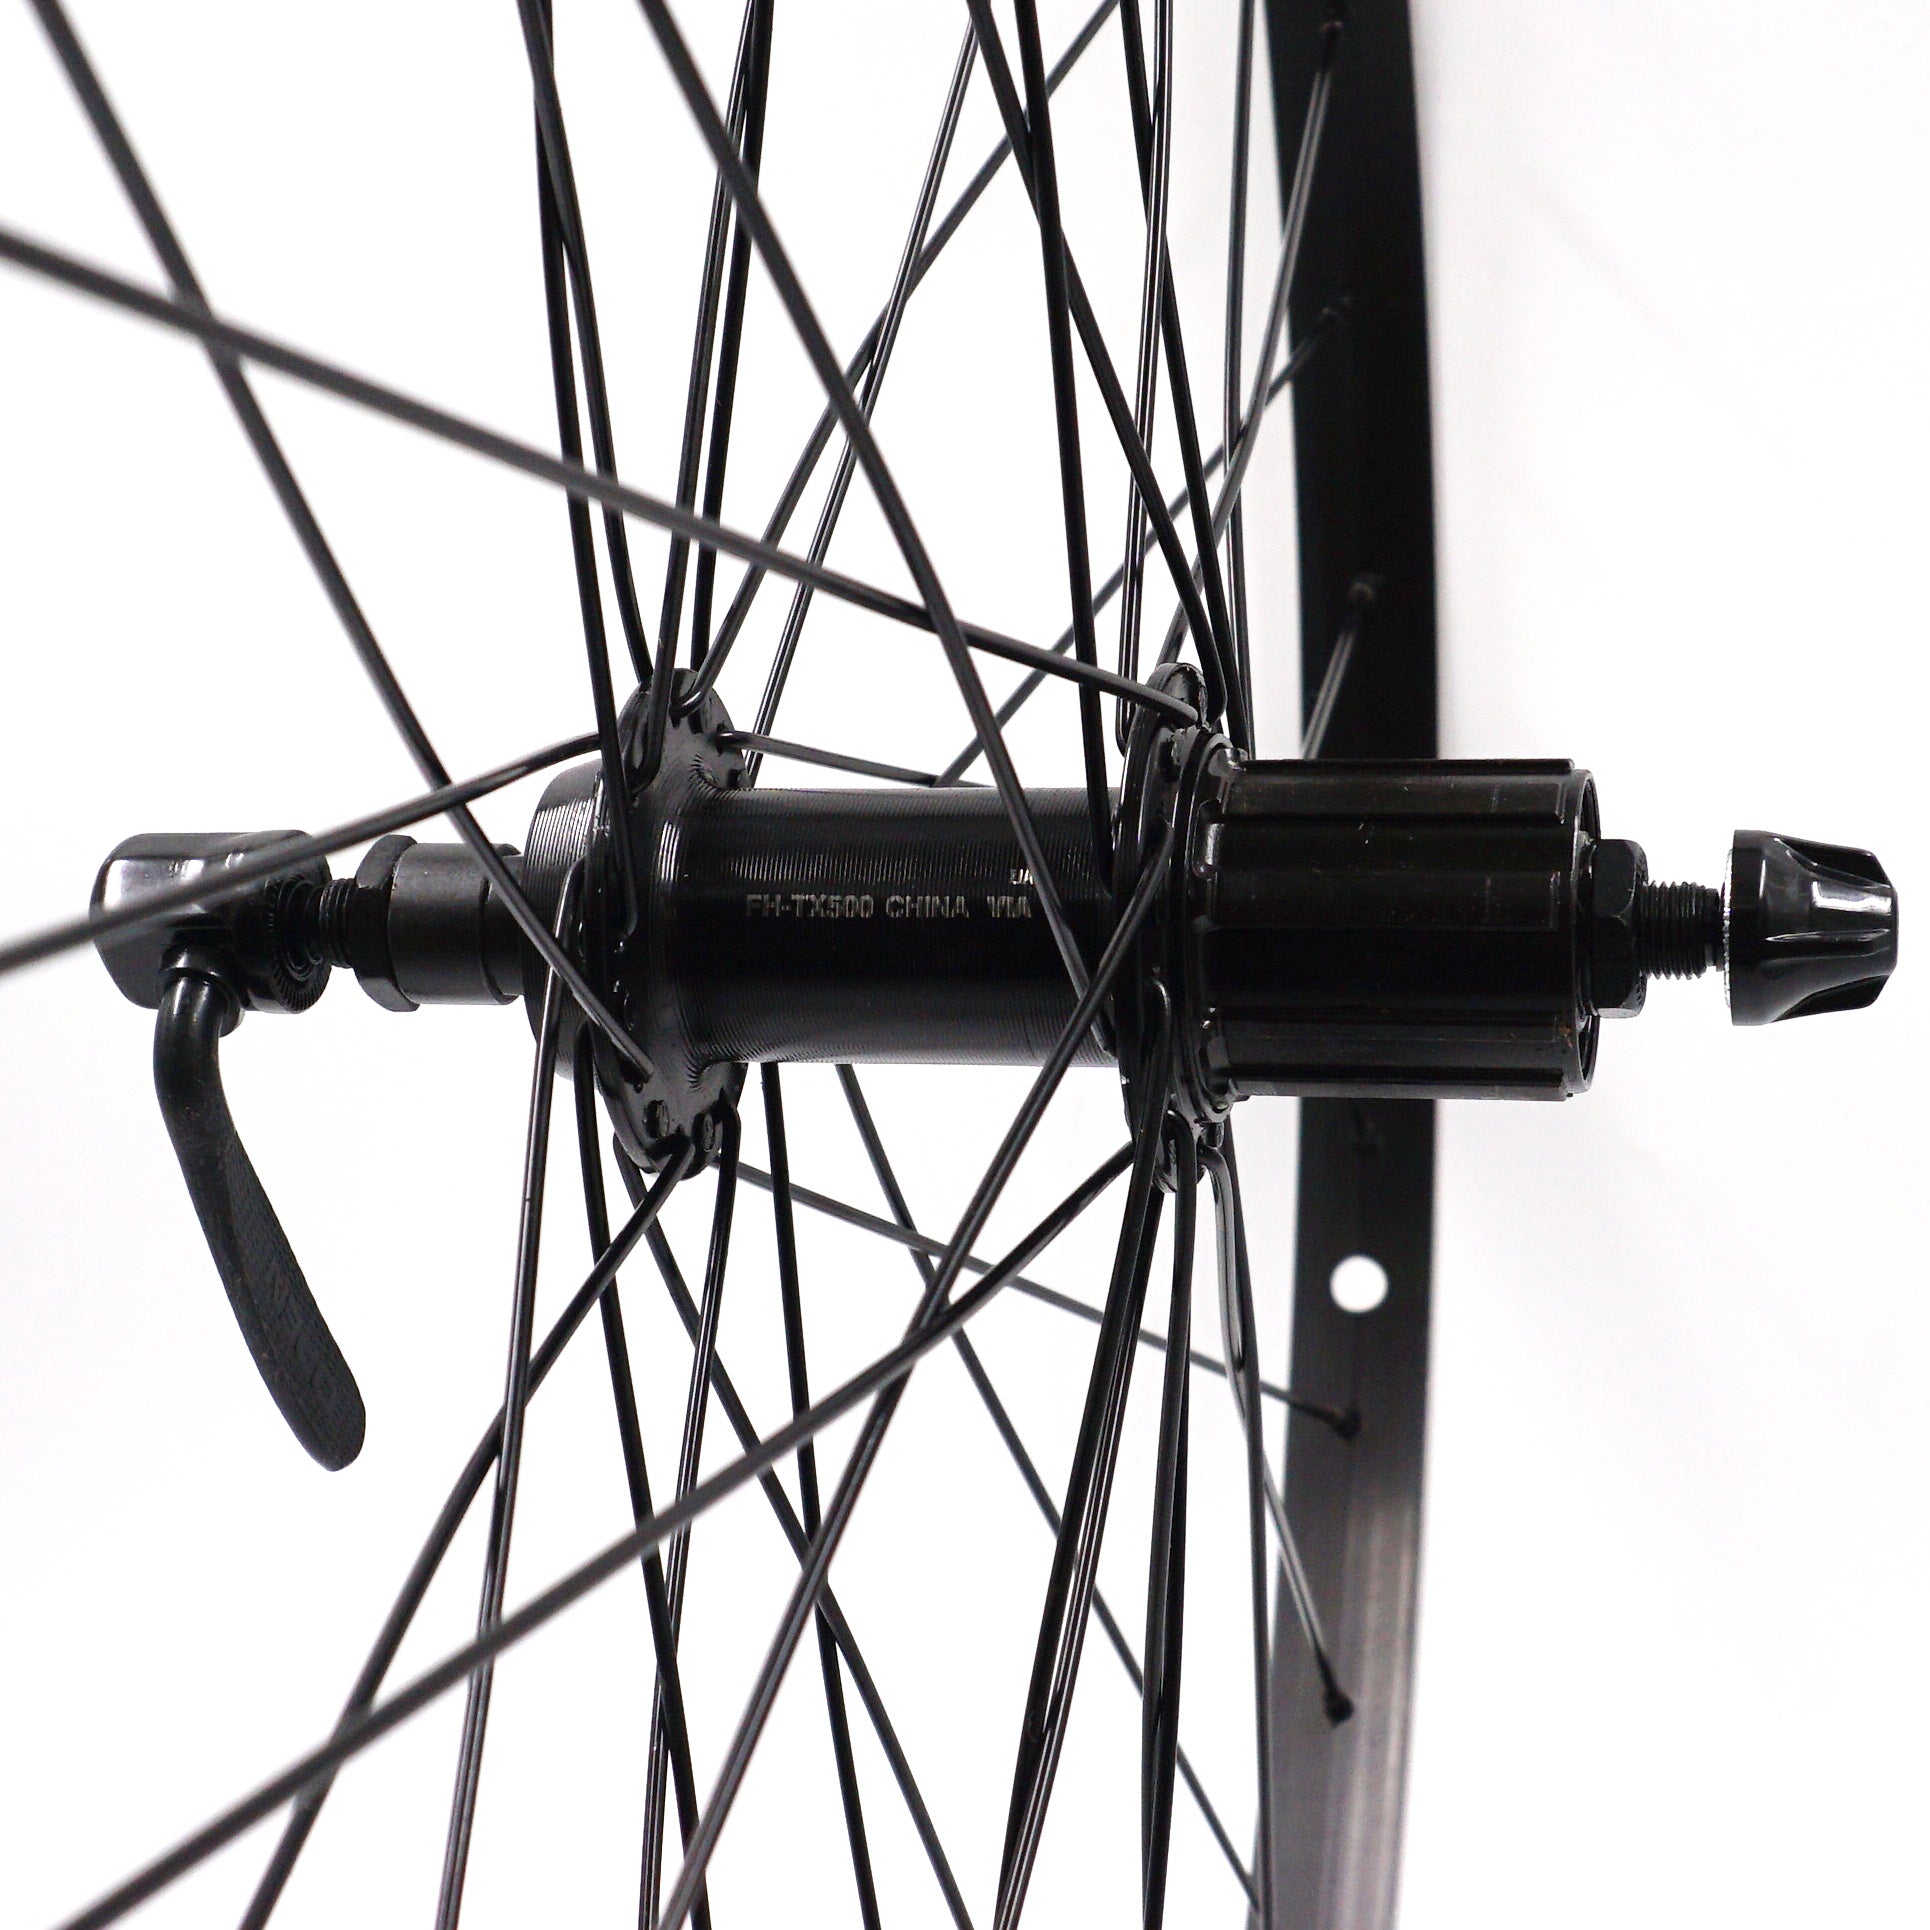 Weinmann 519 26-inch Rear Mountain Bike Shimano HG Cassette Type Rear Wheel - The Bikesmiths